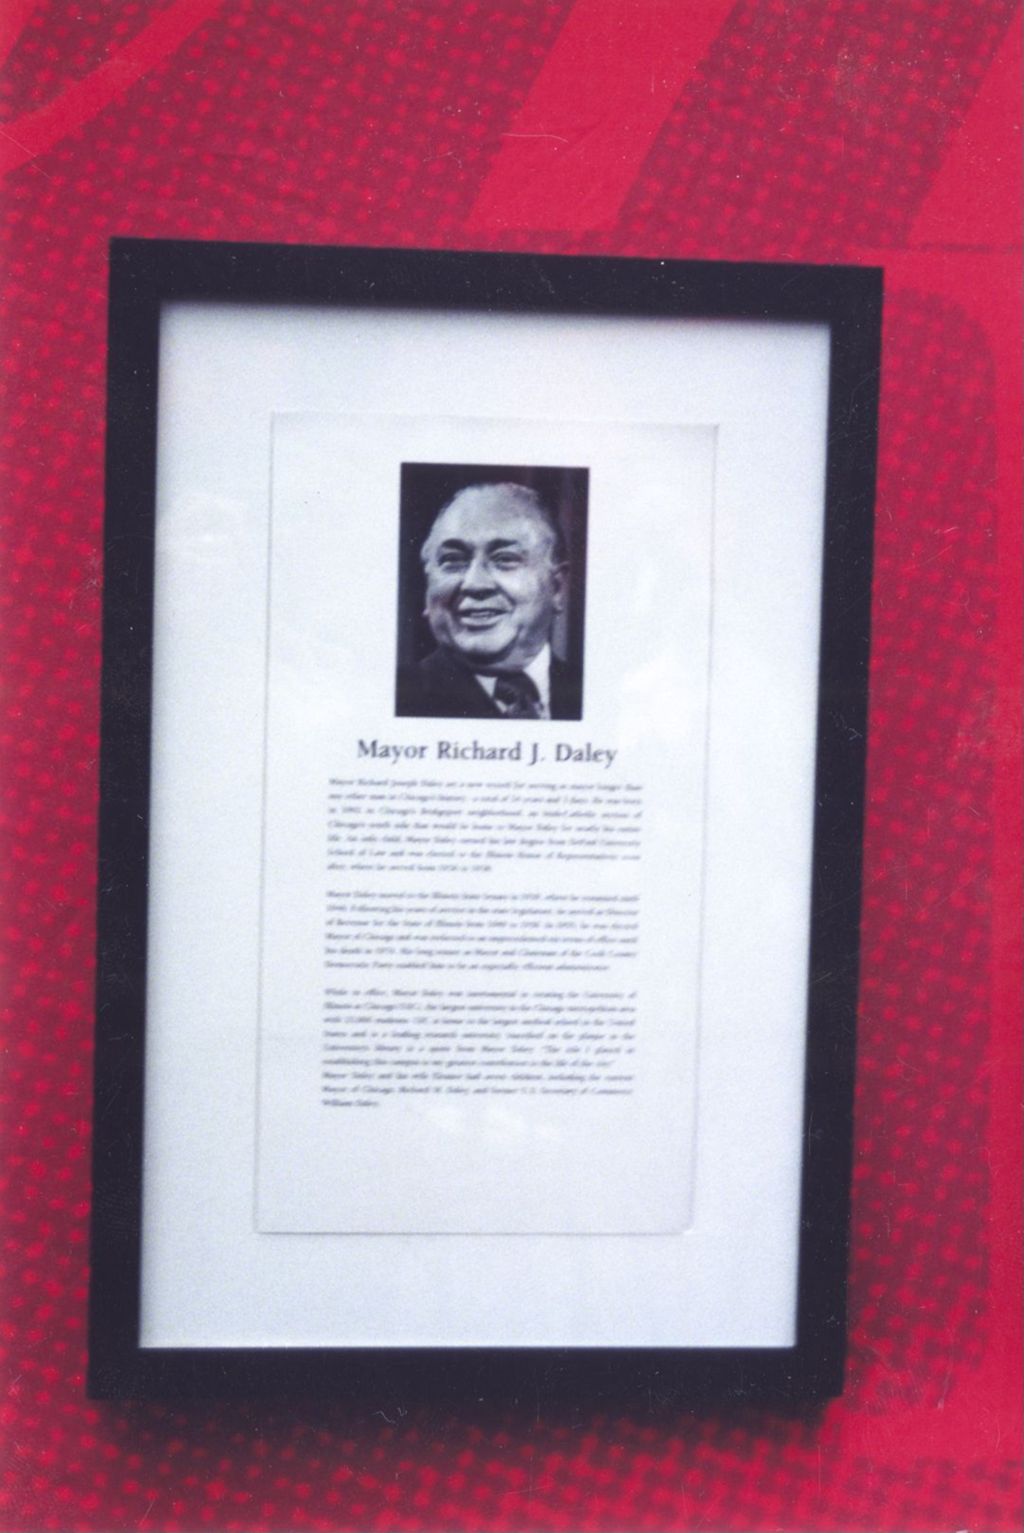 Framed memorial tribute to Richard J. Daley